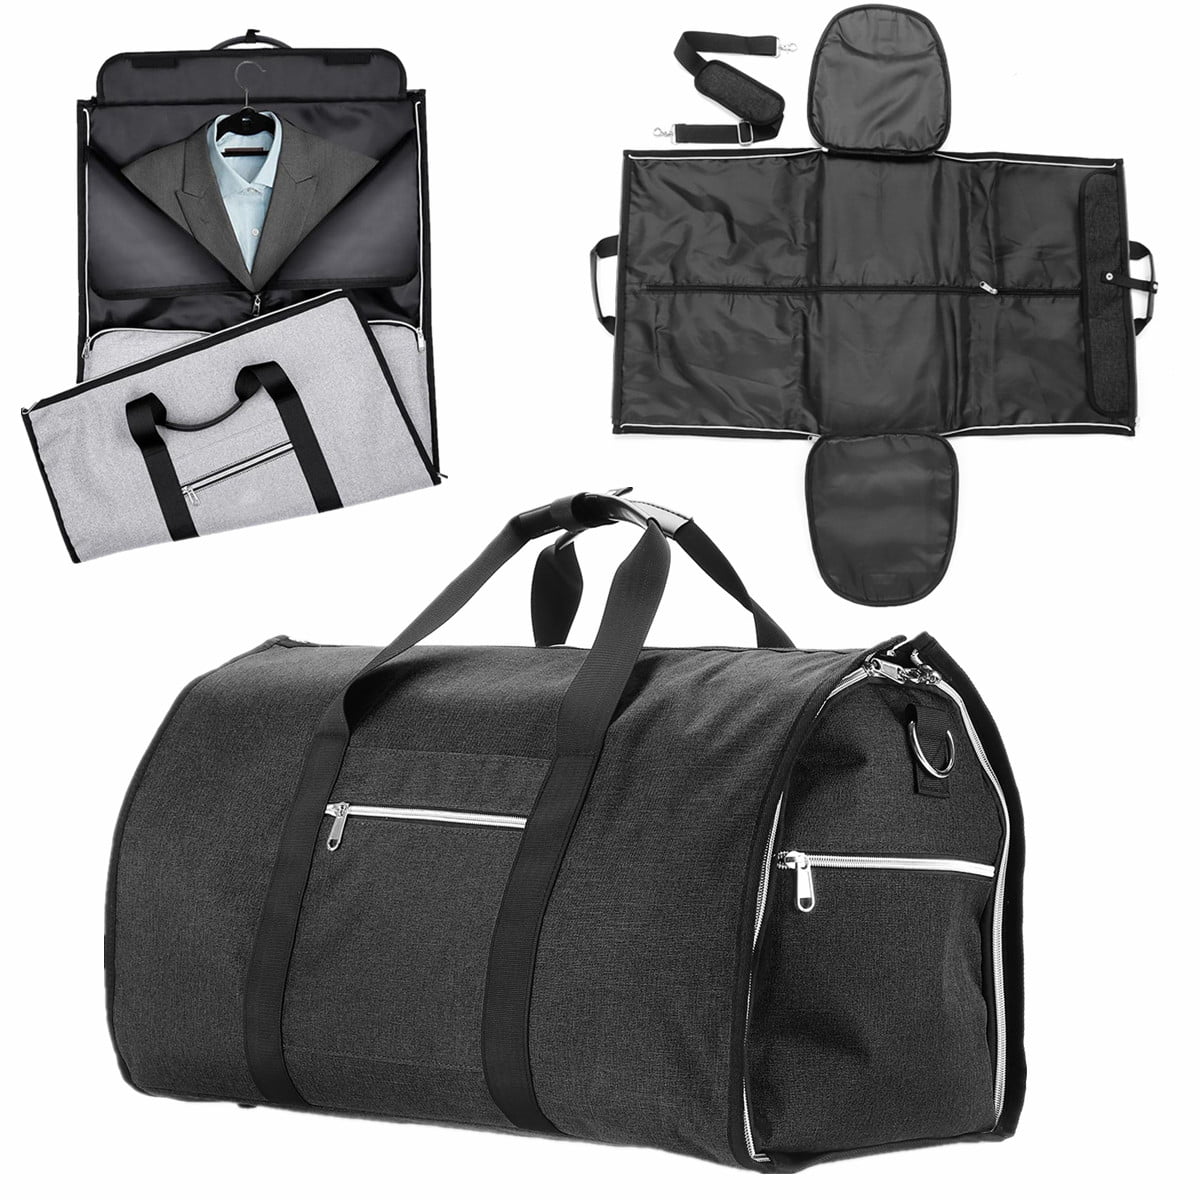 Business Travel Luggage Bag Suit Pocket Dress Garment Bags Carrier Suiter Flight Case Shoes ...